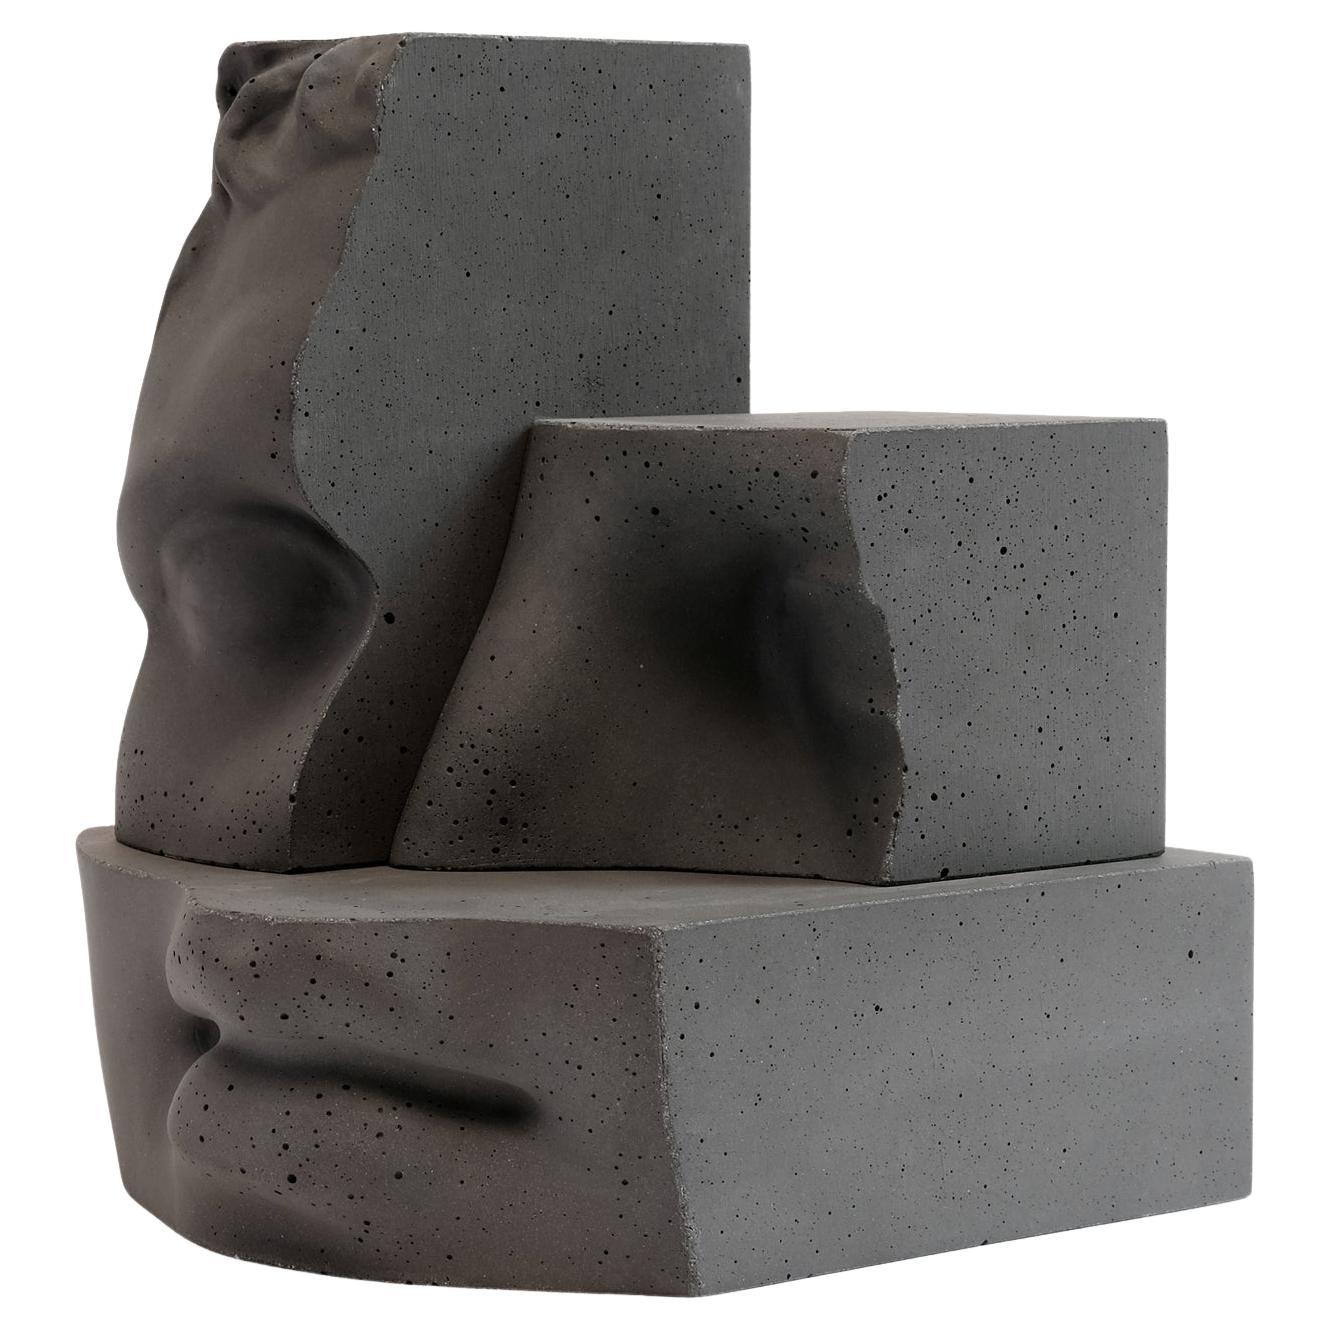 Hermes - Dark Grey - Design Sculpture Paolo Giordano Concrete Cement Cast For Sale